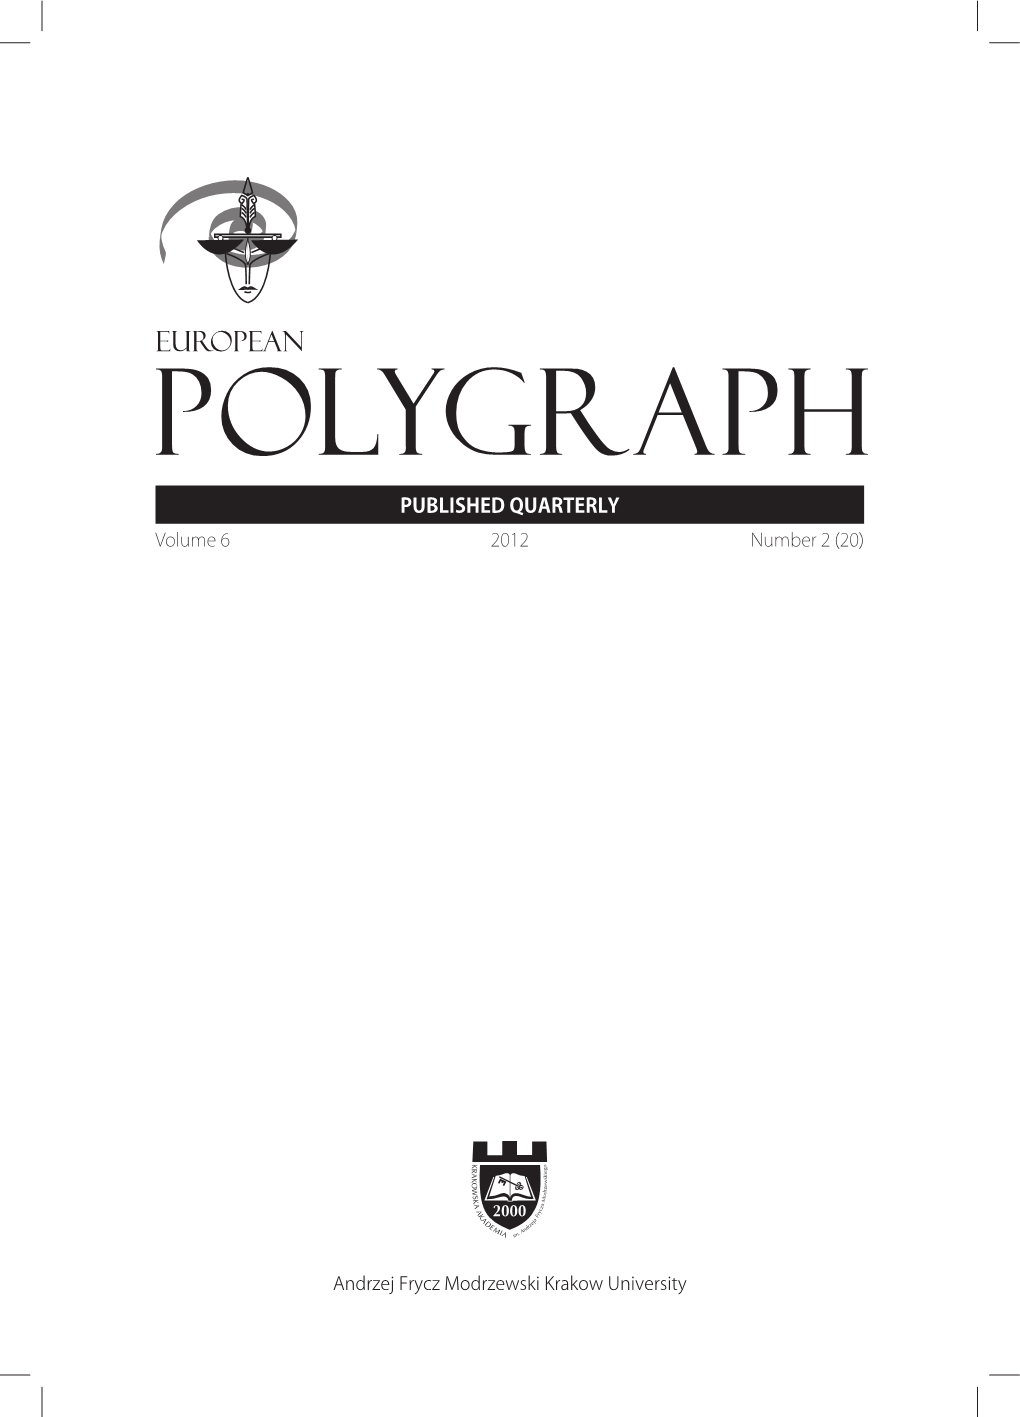 Alibi Check by Polygraph Examination